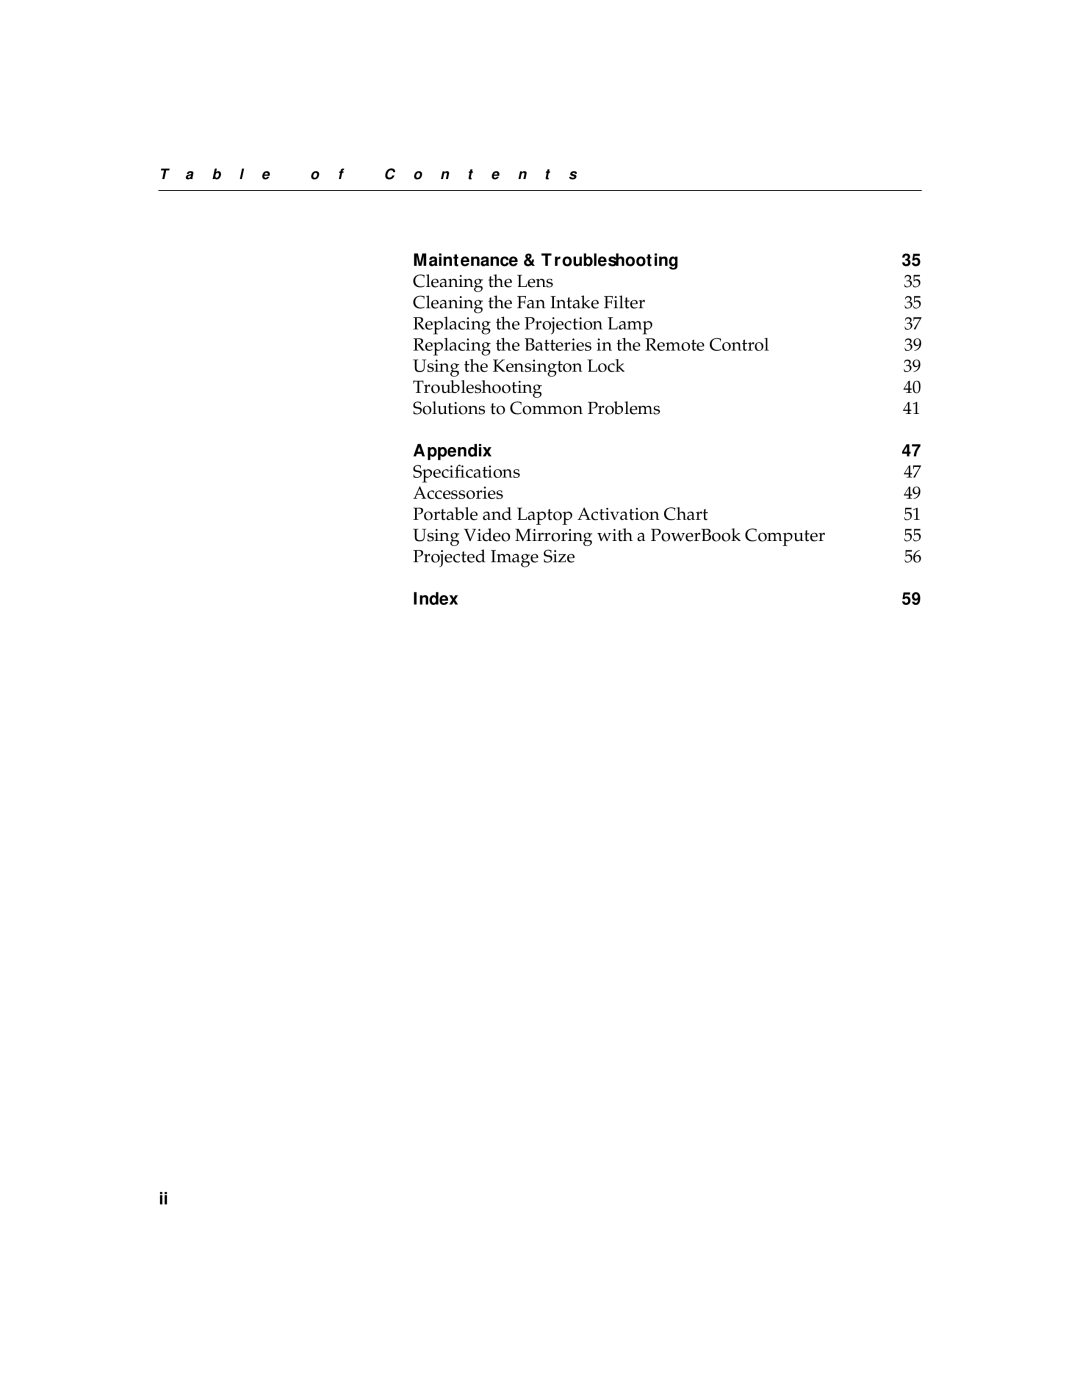 BOXLIGHT MP-350m manual Maintenance & Troubleshooting, Appendix, Index 